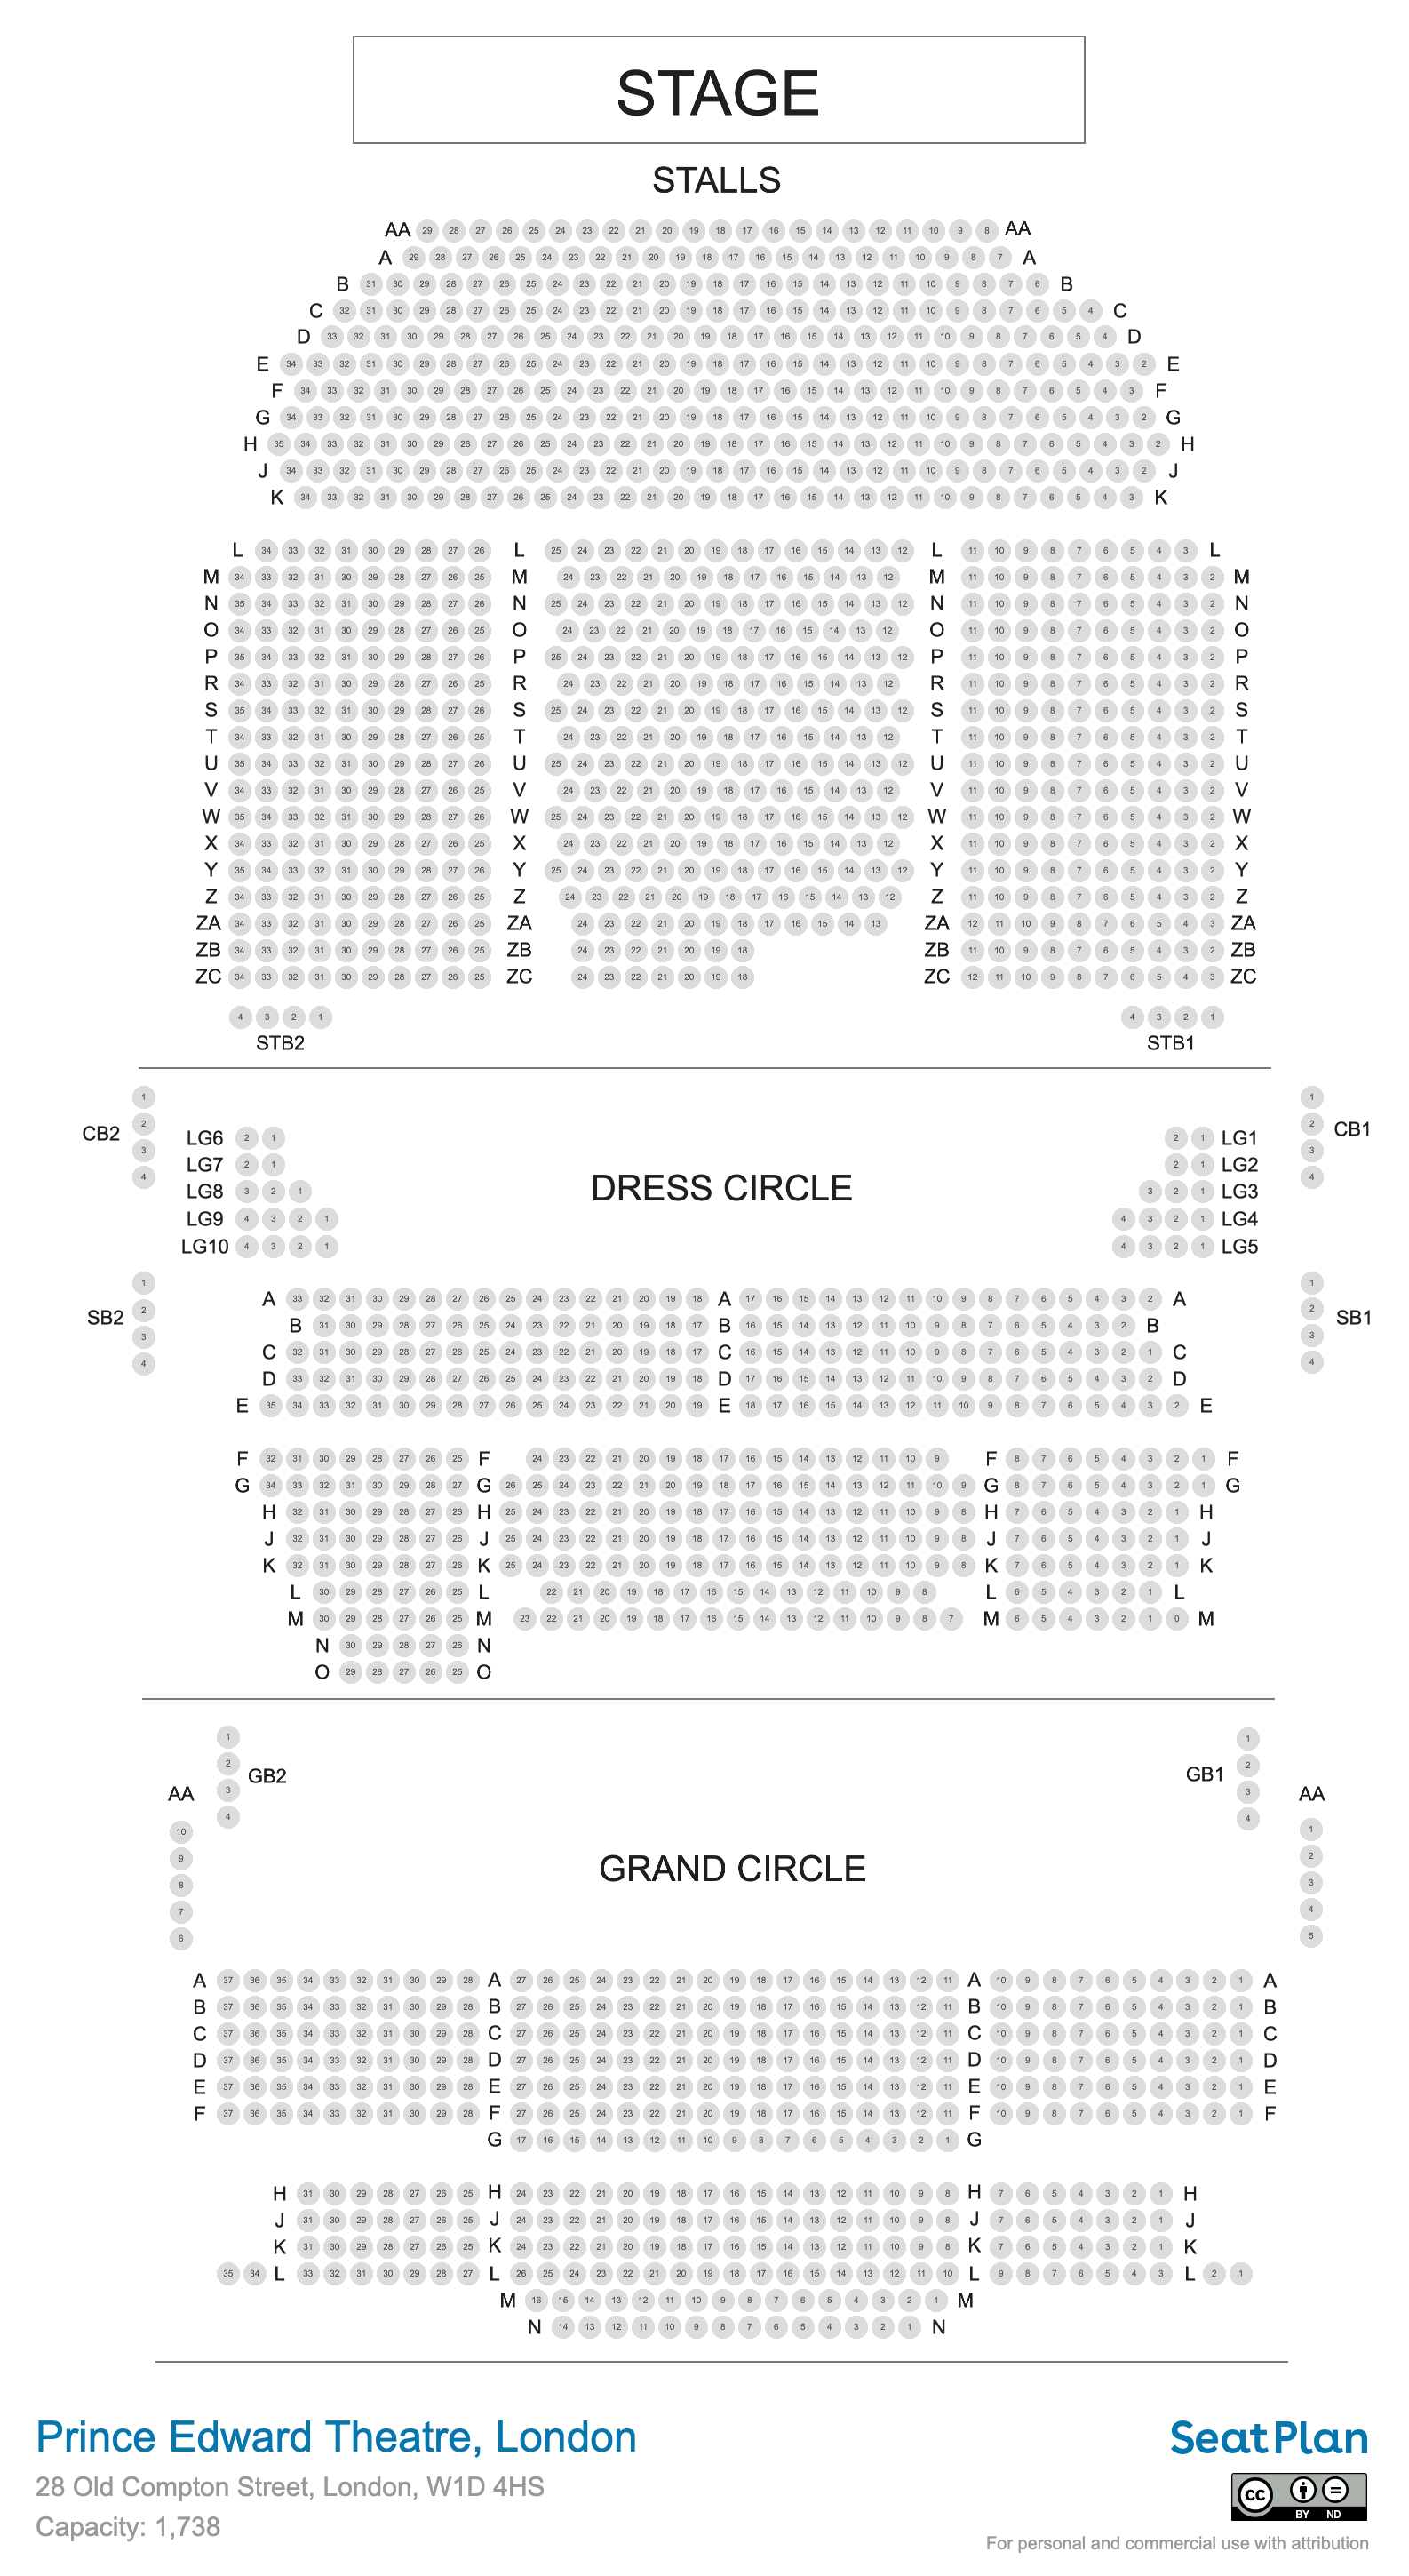 Prince Edward Theatre seating plan